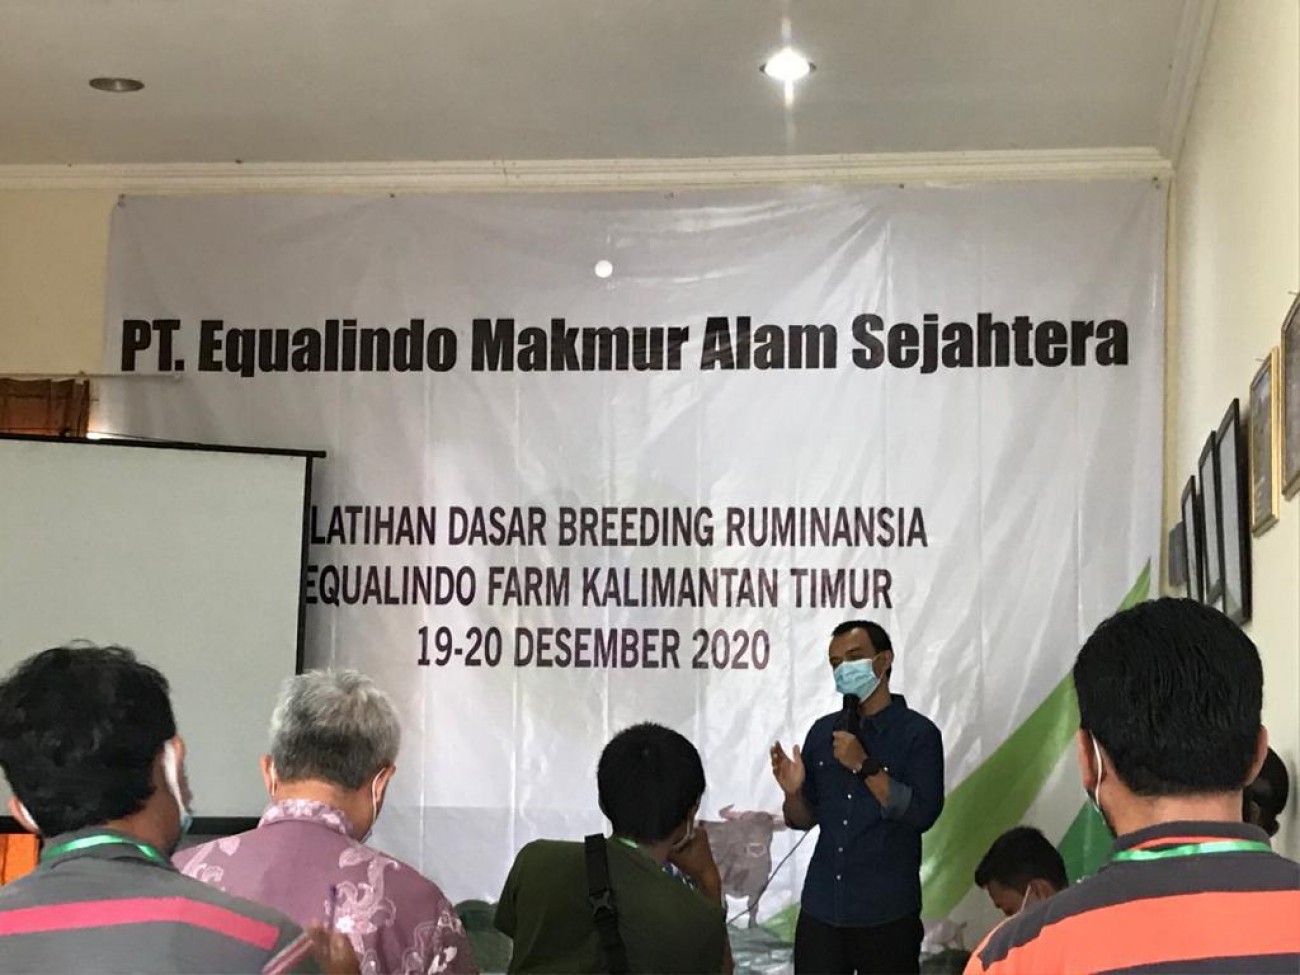 Pelatihan Dasar Breeding Ruminansia PT. Equalindo Makmur Alam Sejahtera Kalimantan Timur.